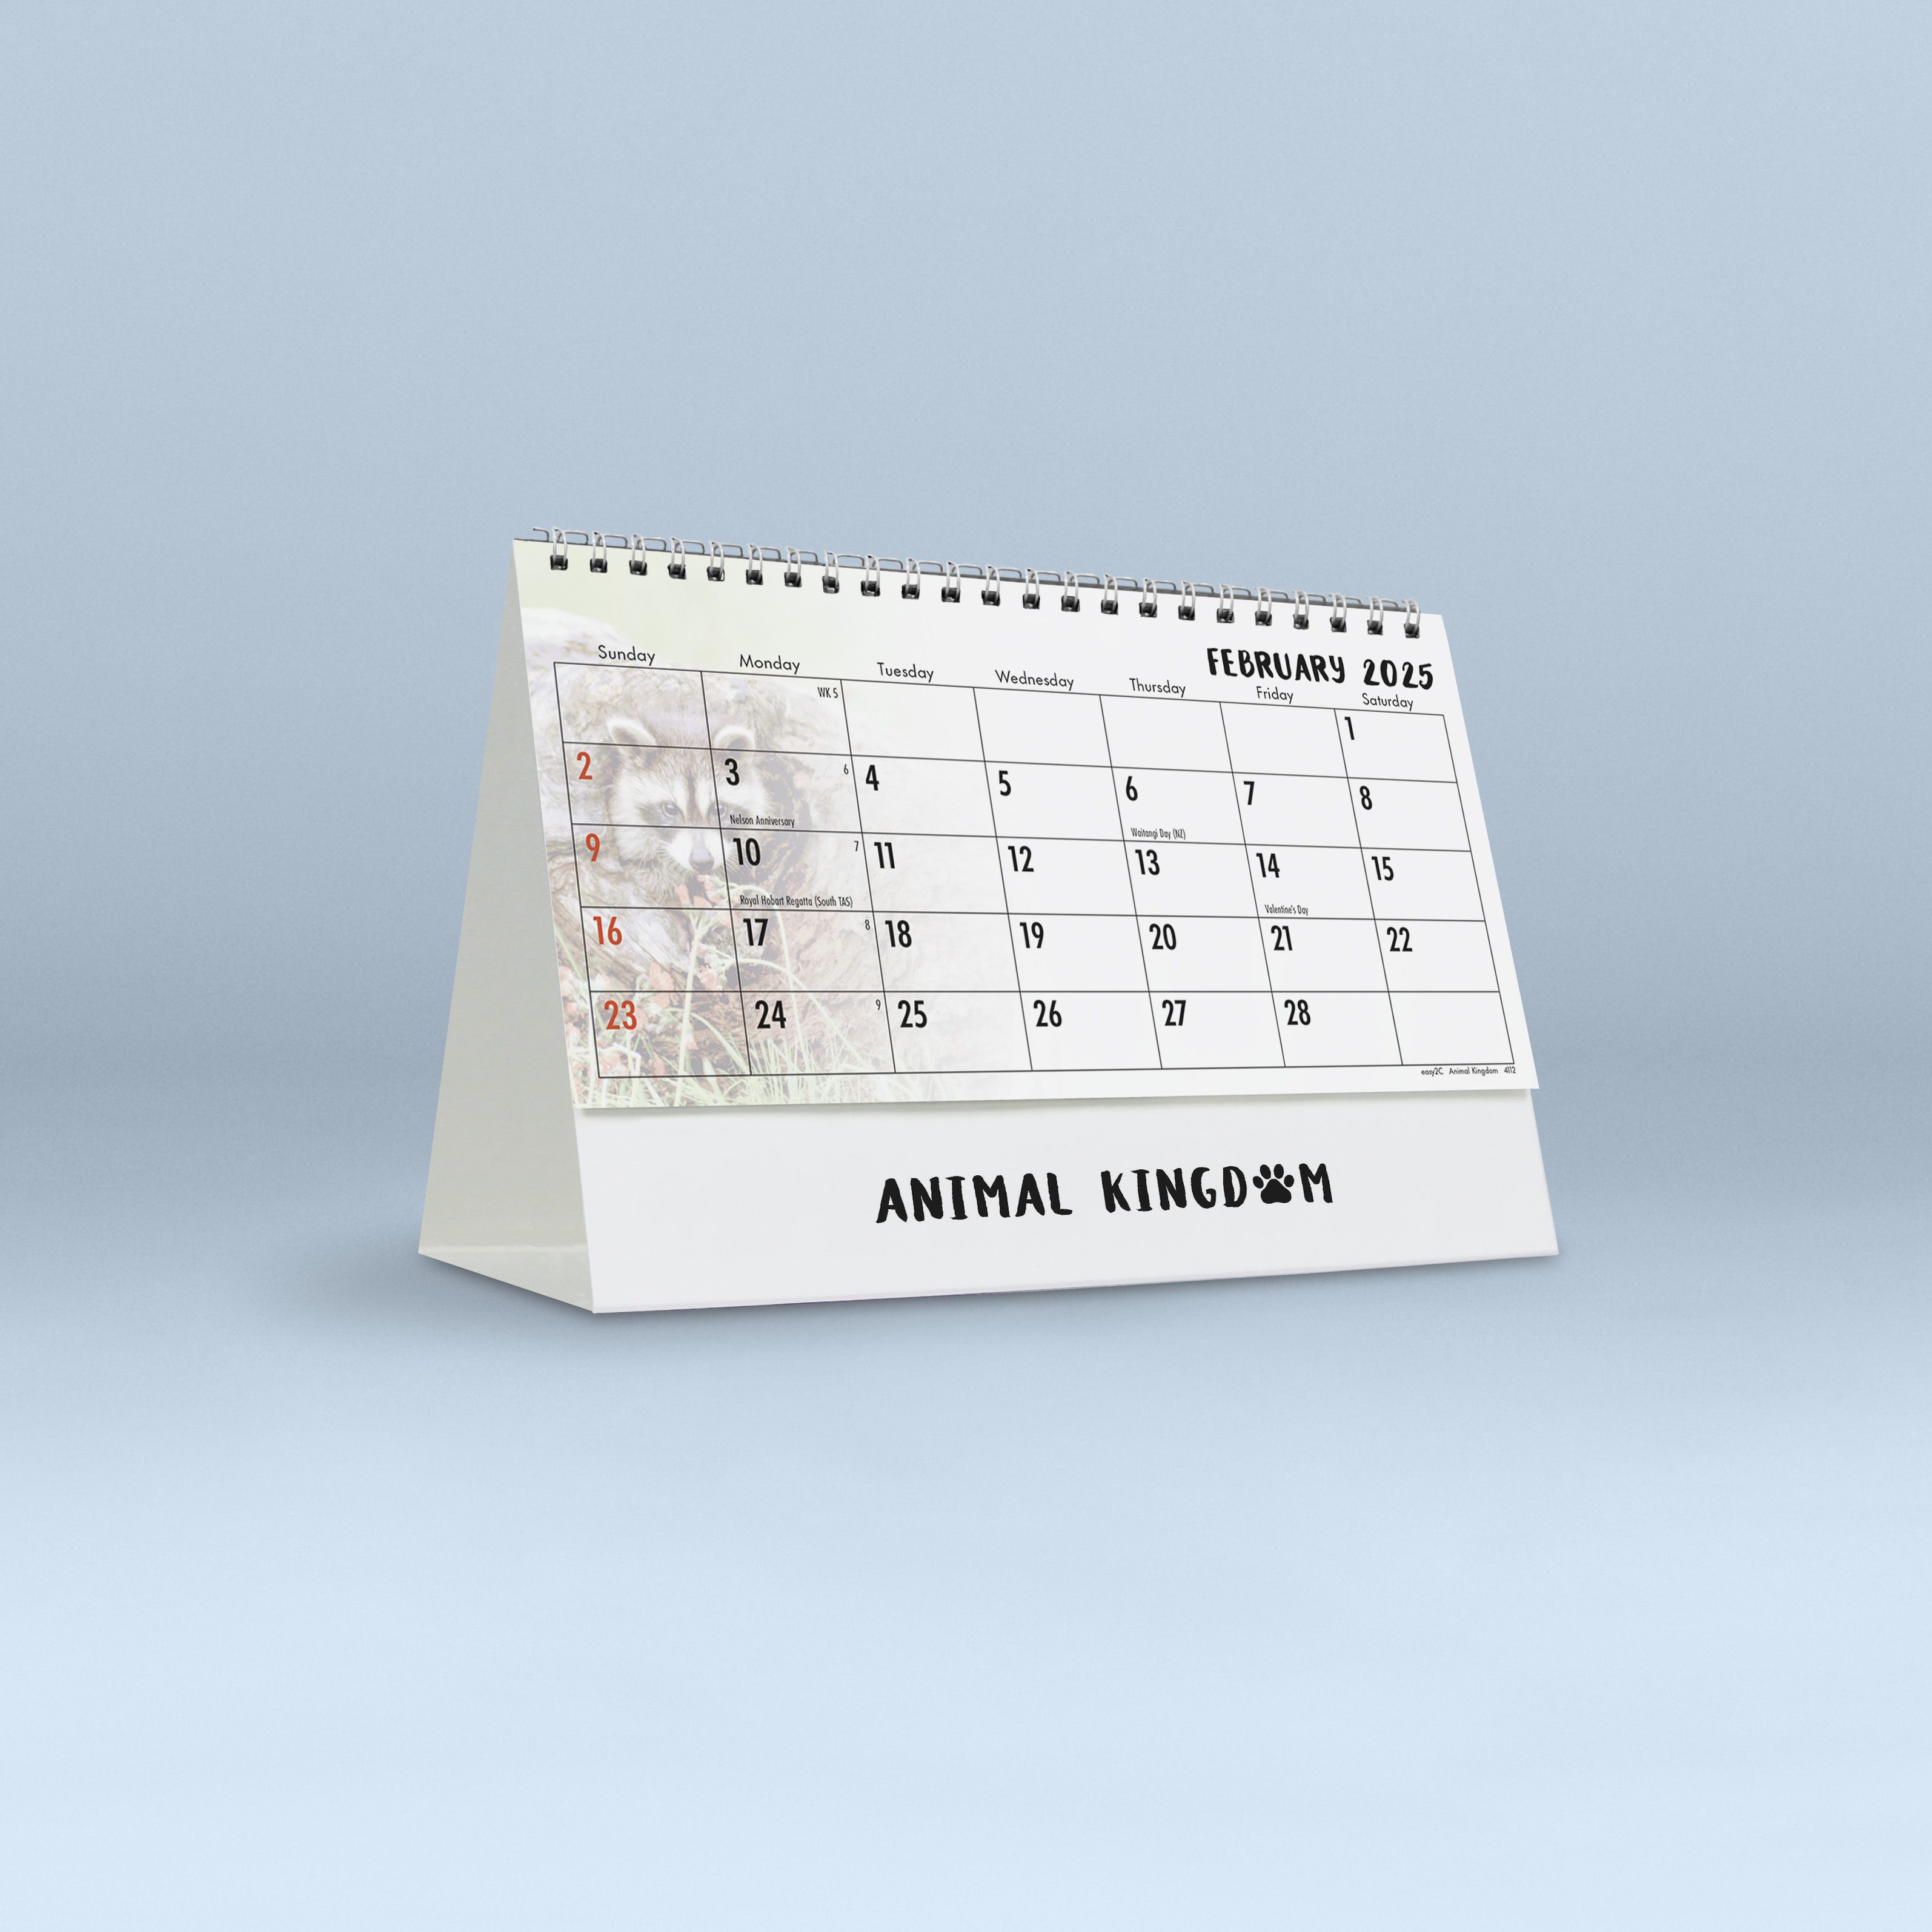 Animal Kingdom_4257_25_03